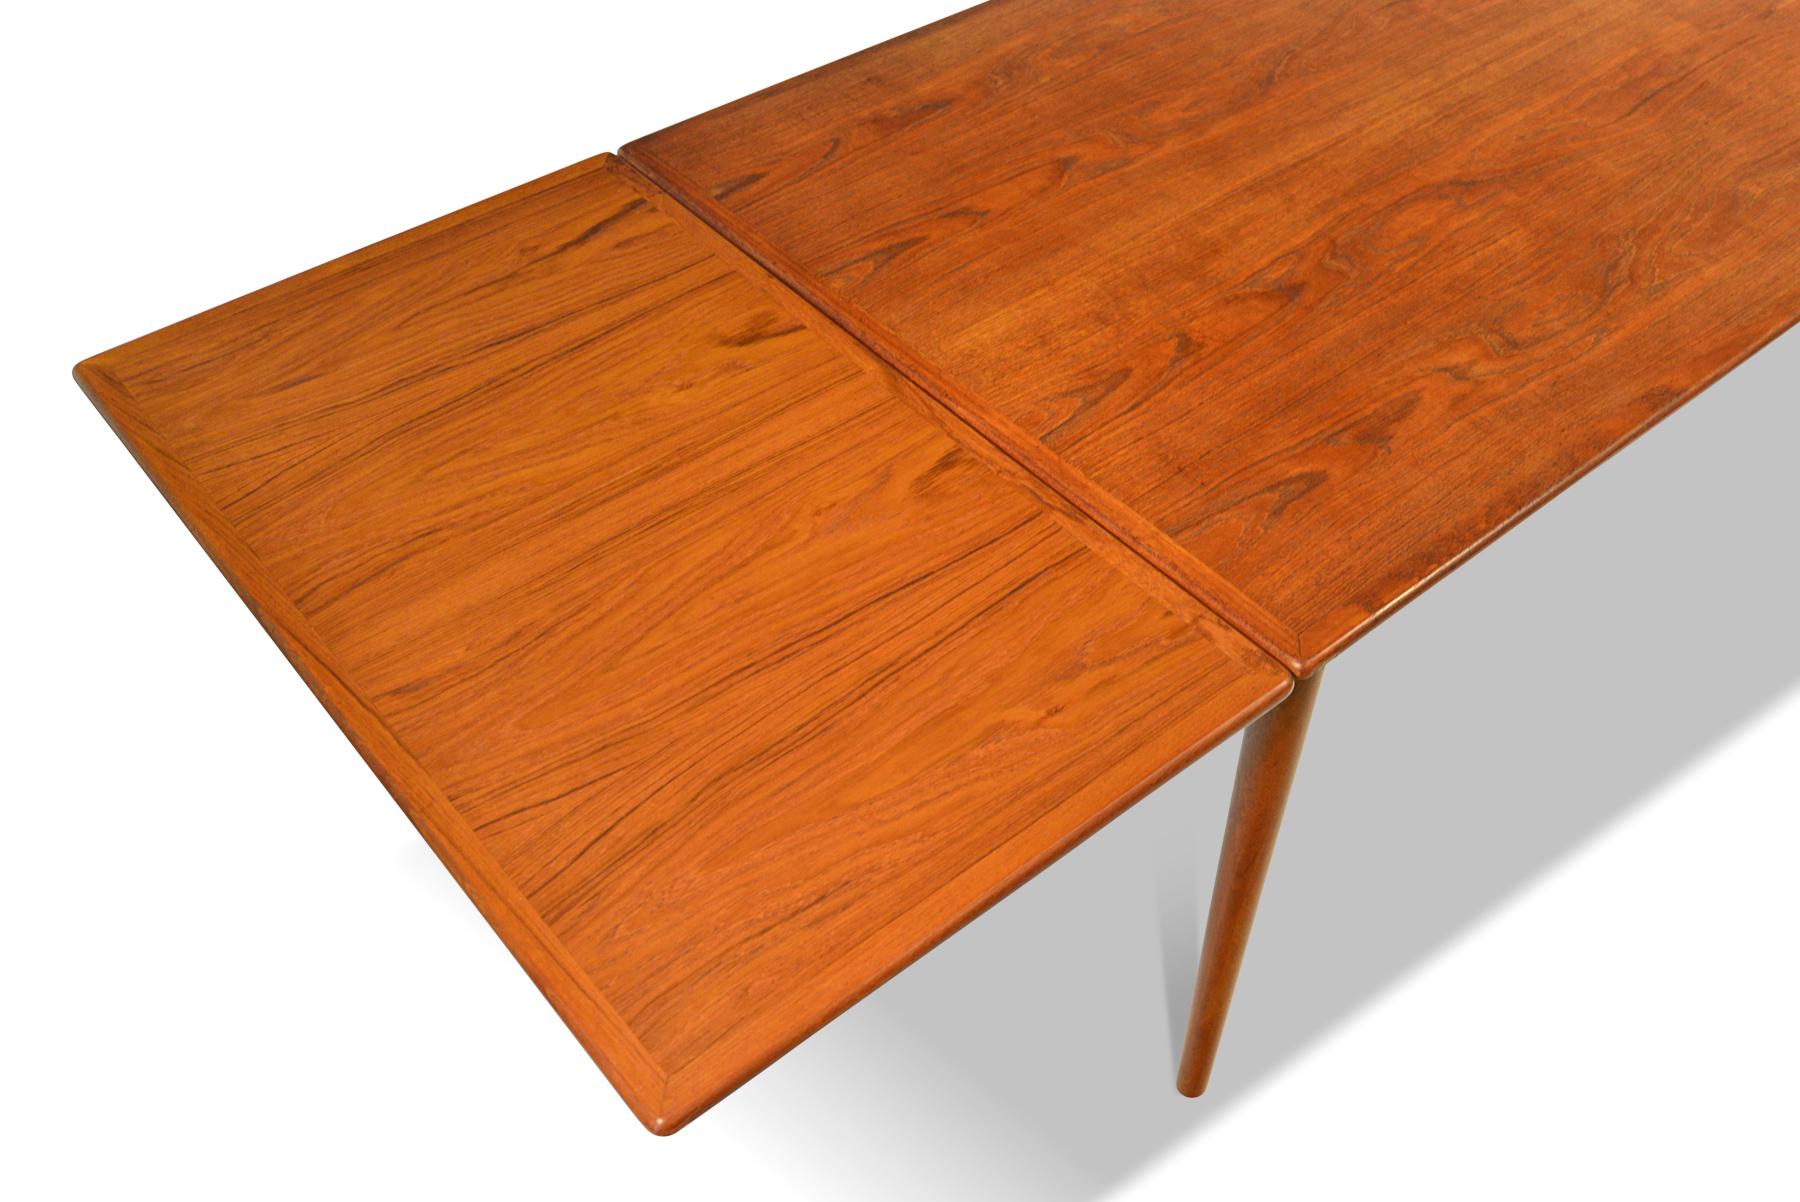 20th Century Large Danish Modern Rectangular Draw Leaf Dining Table in Teak